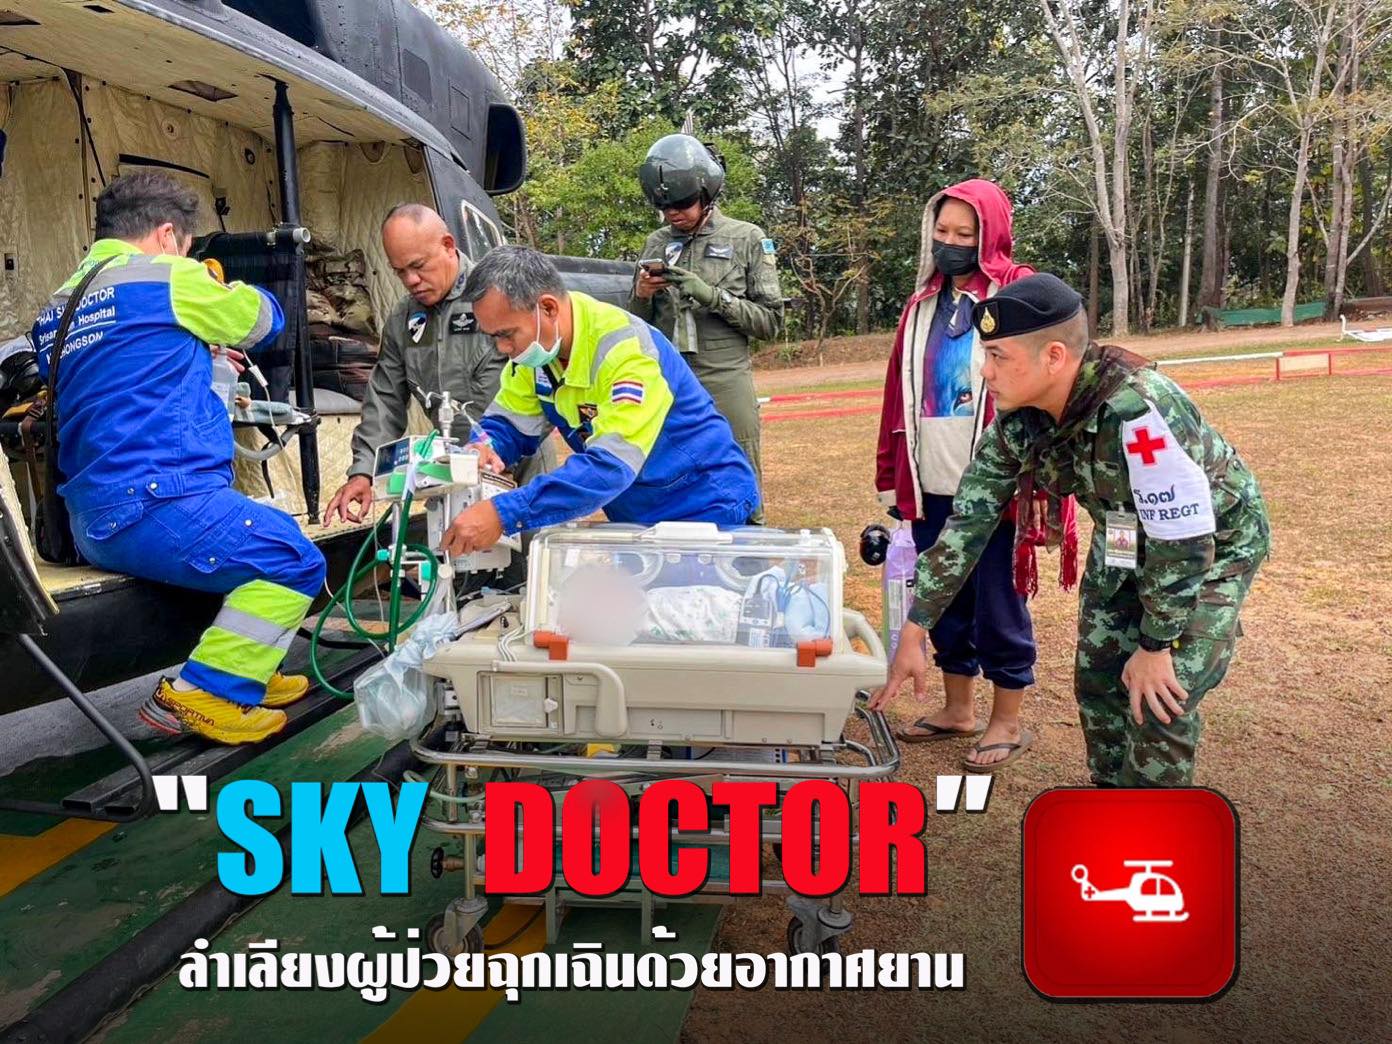 “Sky Doctor ทำการช่วยเหลือเคลื่อนย้ายผู้ป่วยฉุกเฉินทางอากาศยาน ในพื้นที่ จ.แม่ฮ่องสอน”